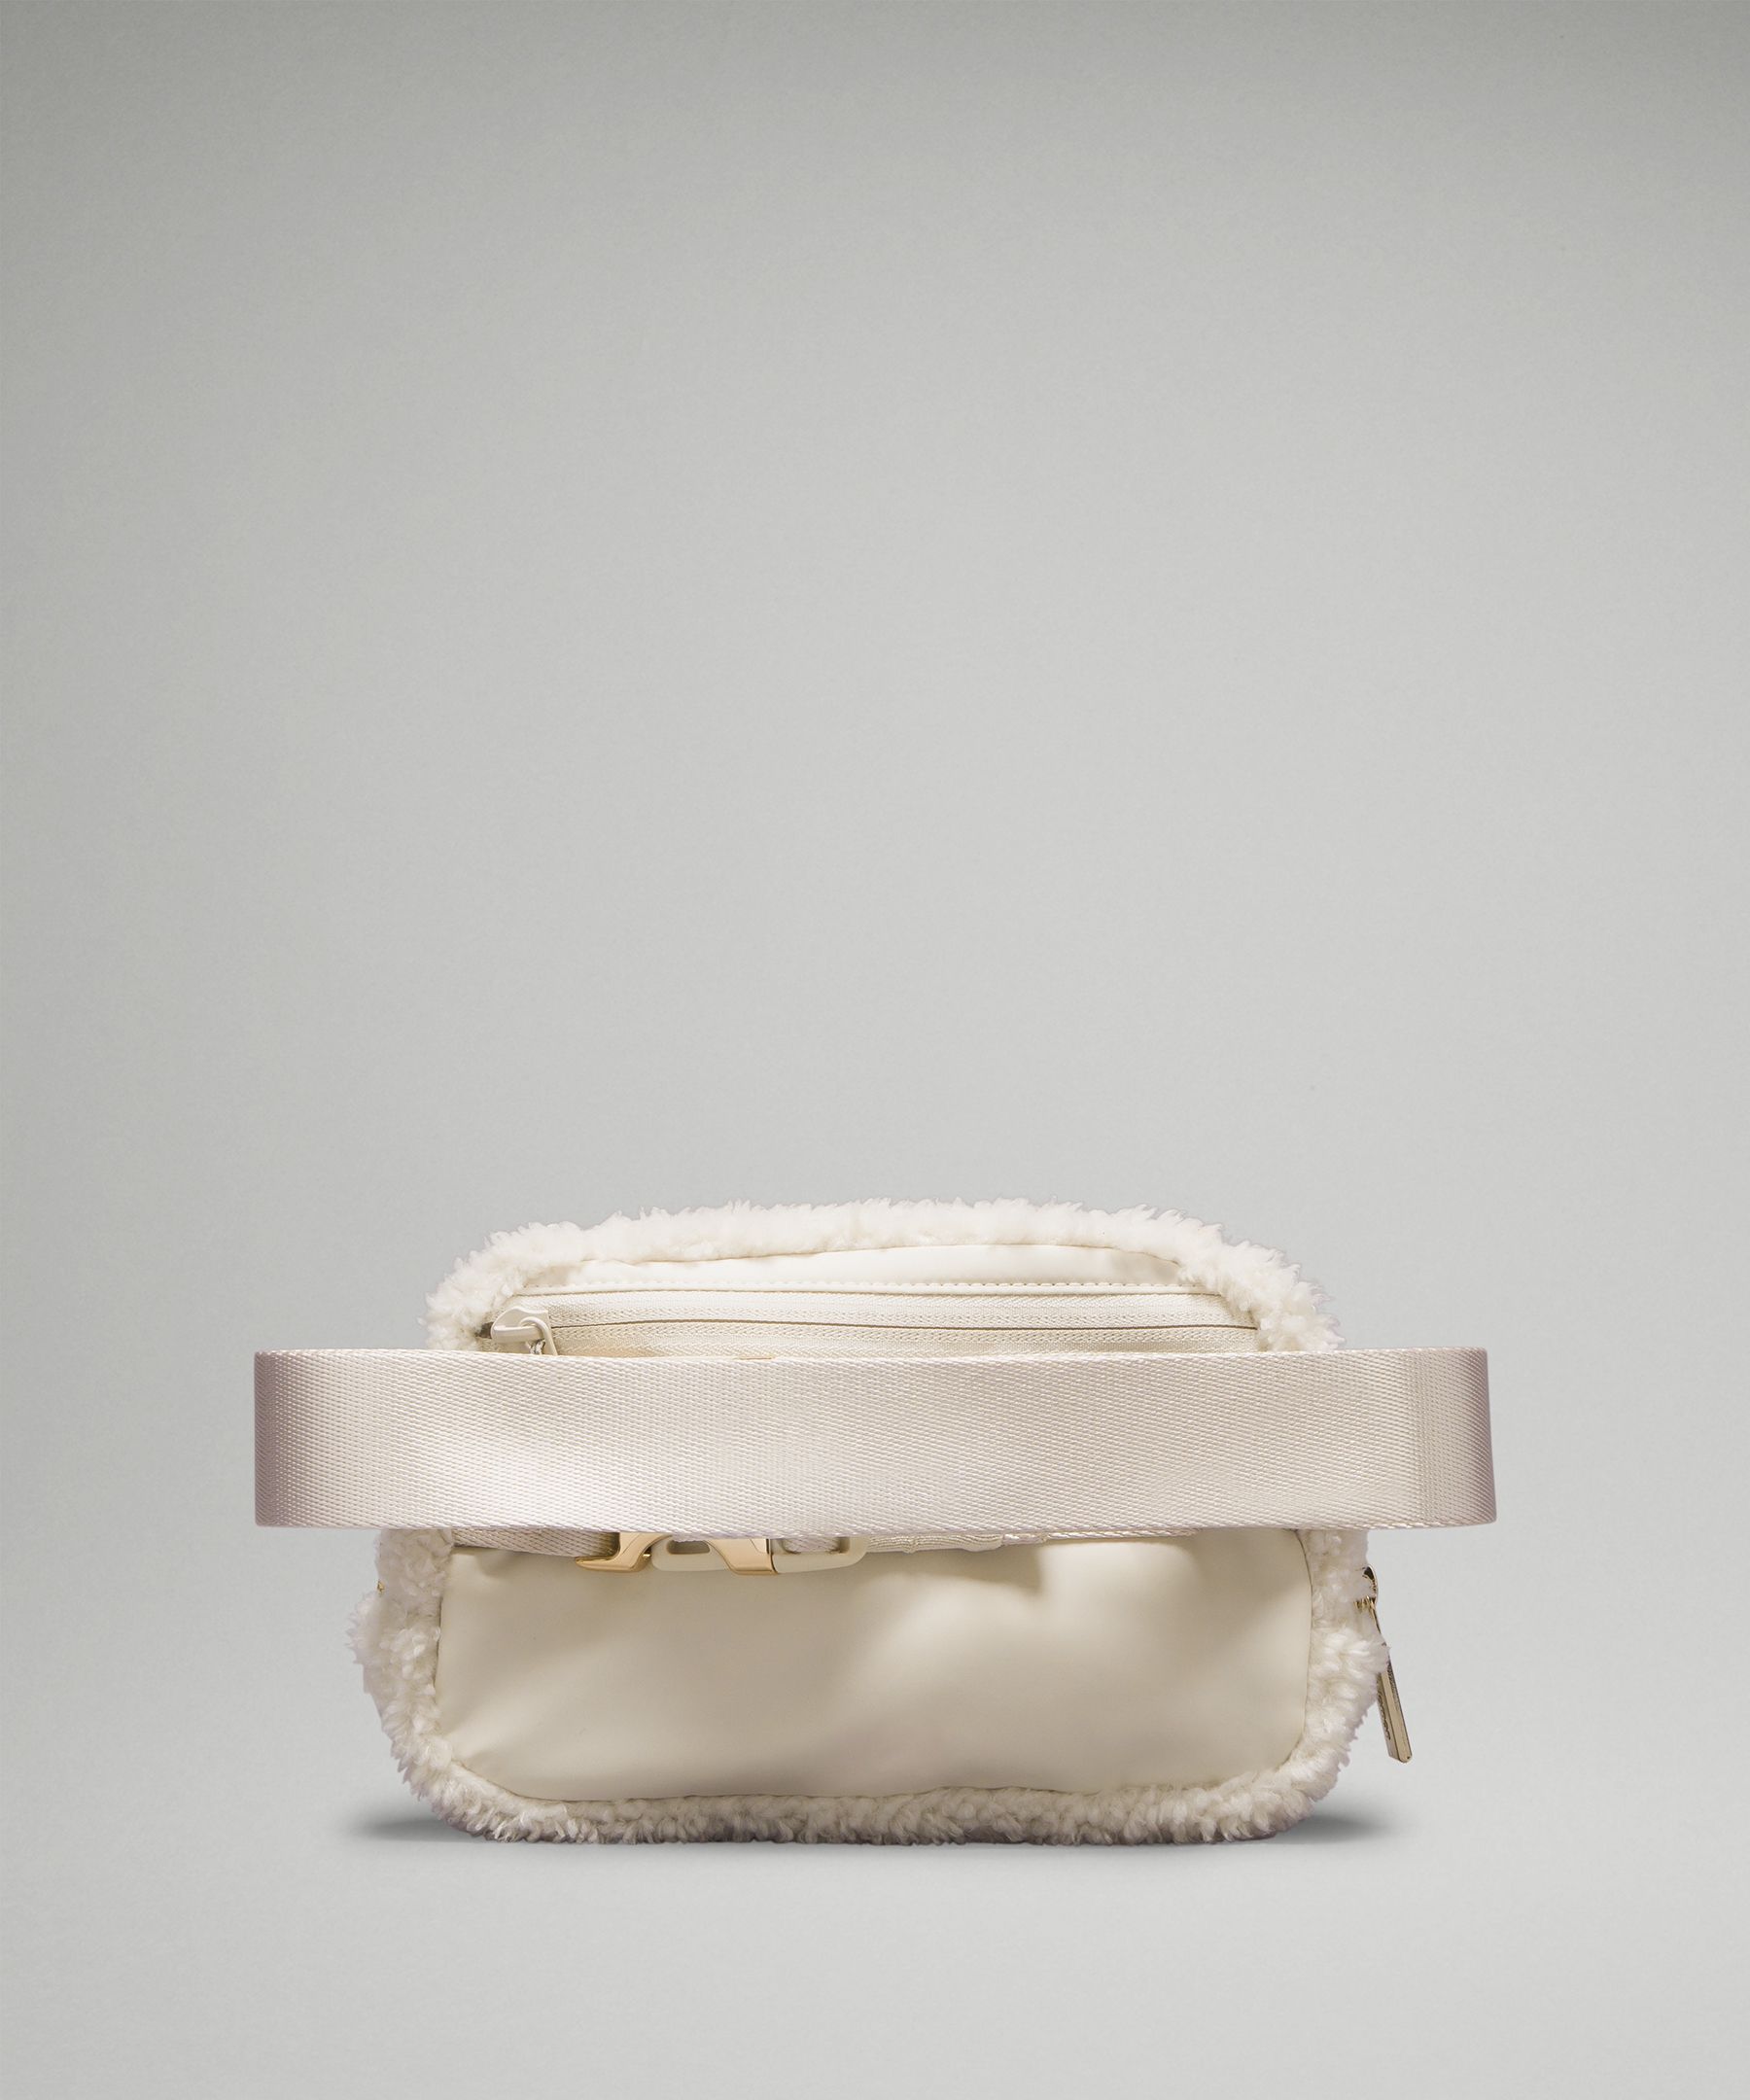 Lululemon NEW Everywhere Fleece Belt Bag White - $82 New With